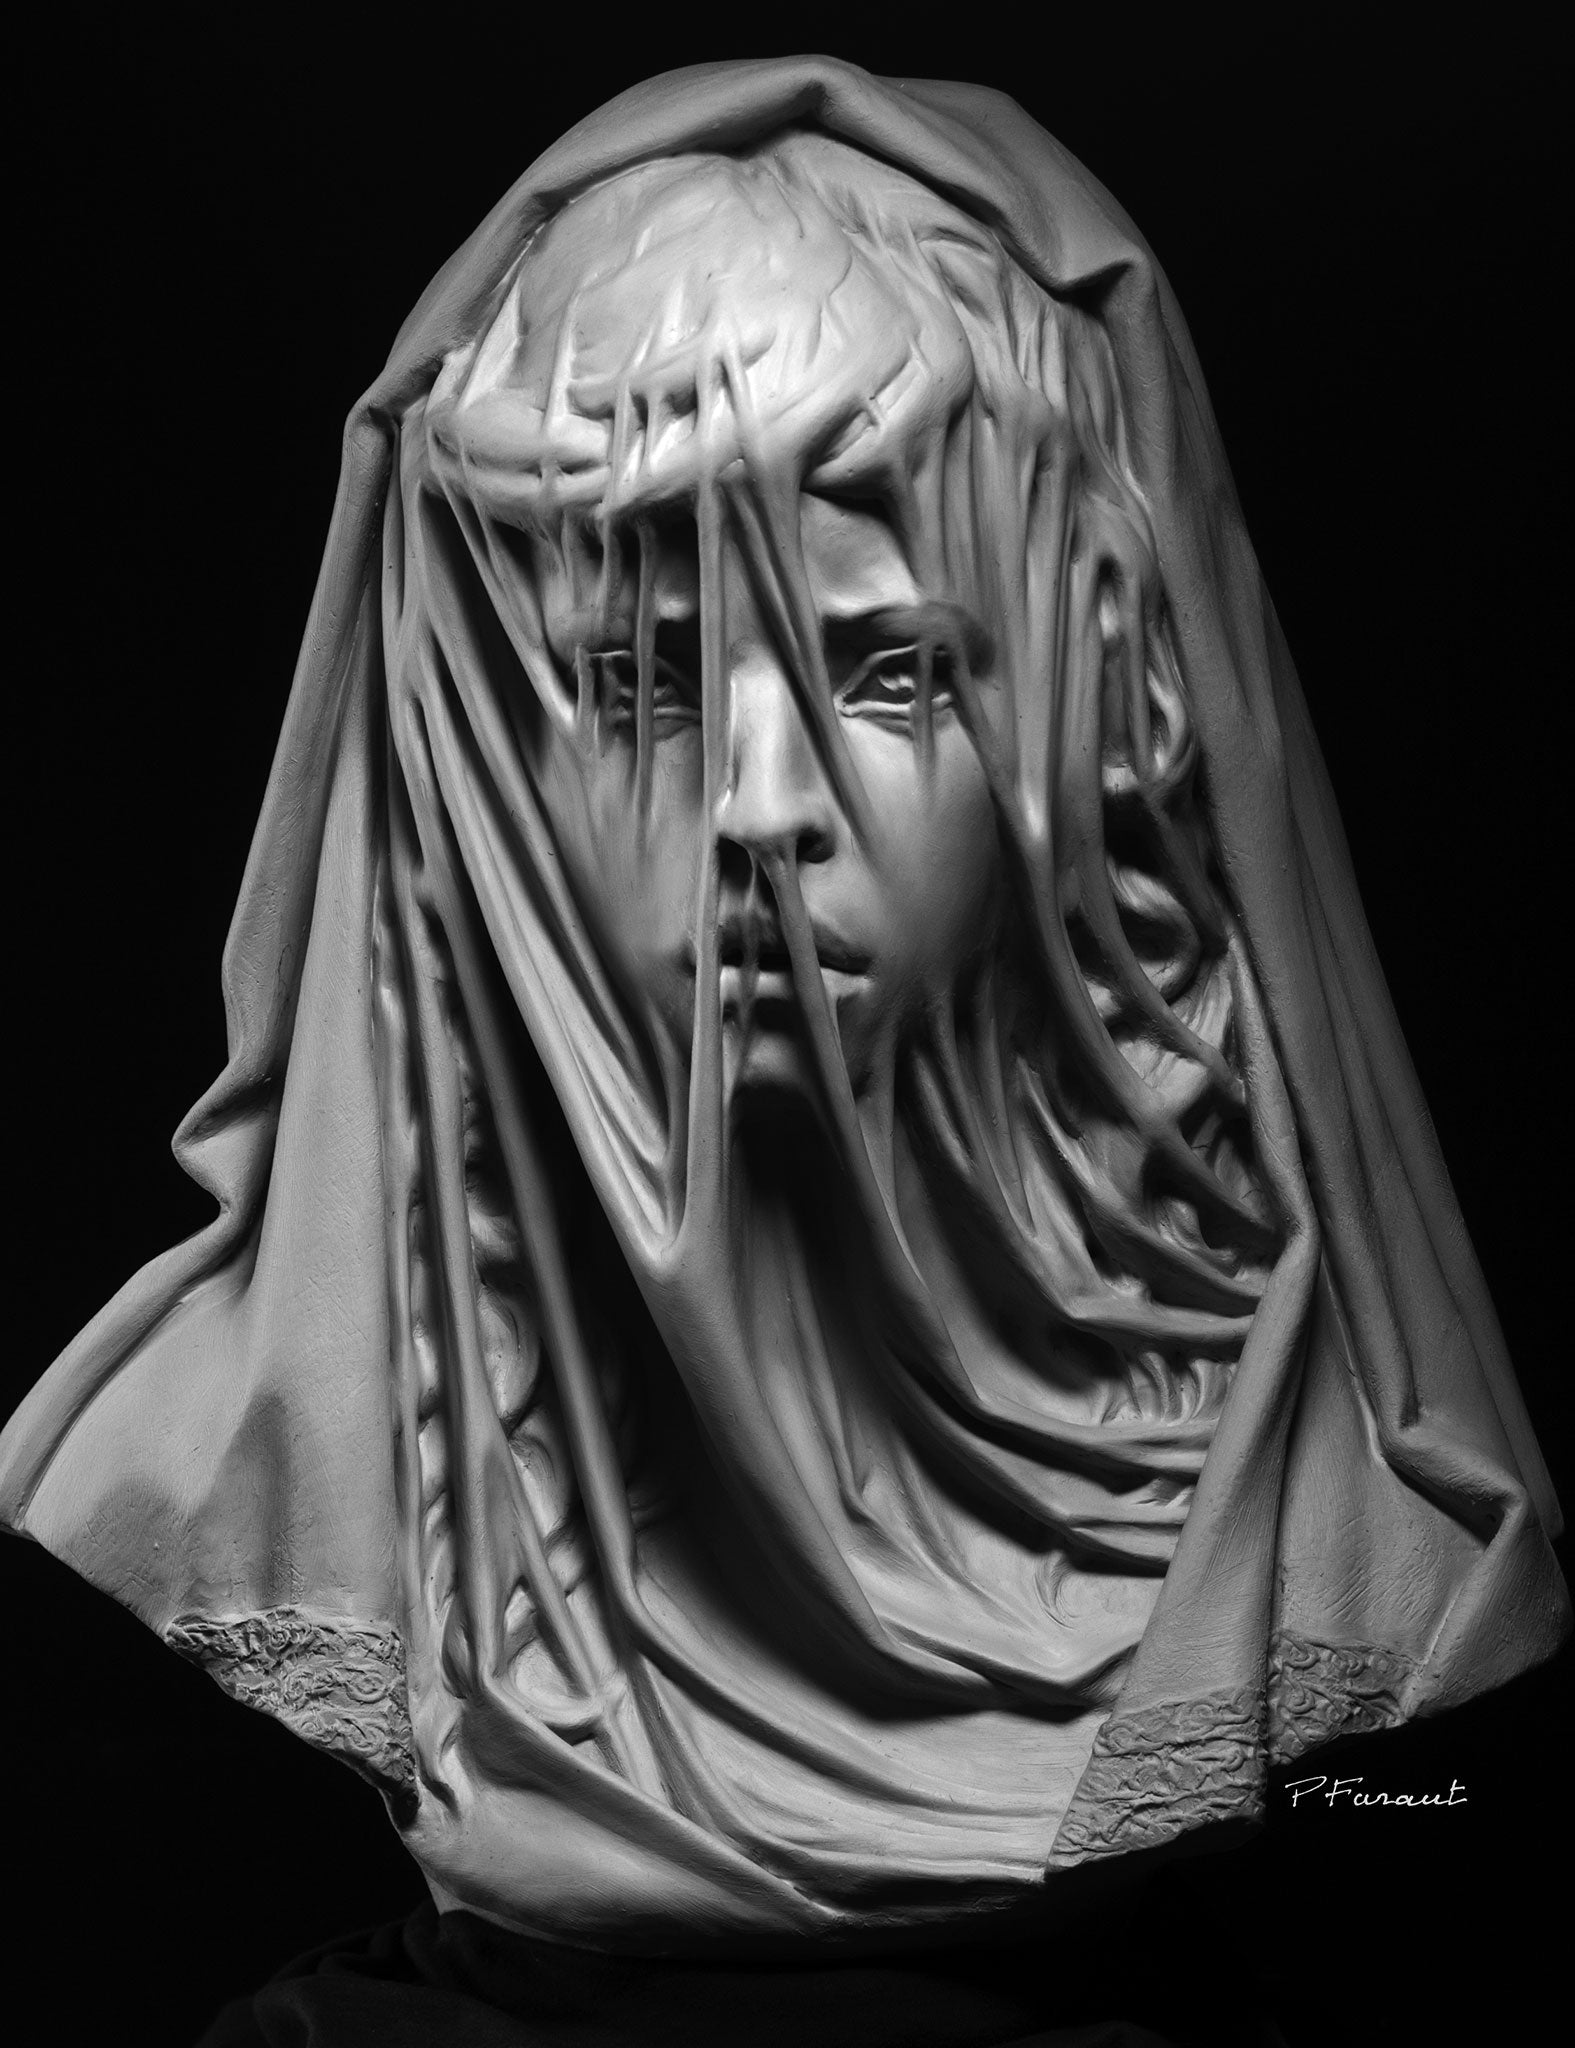 Portrait bust of a child in a shear wedding veil by Philippe Faraut